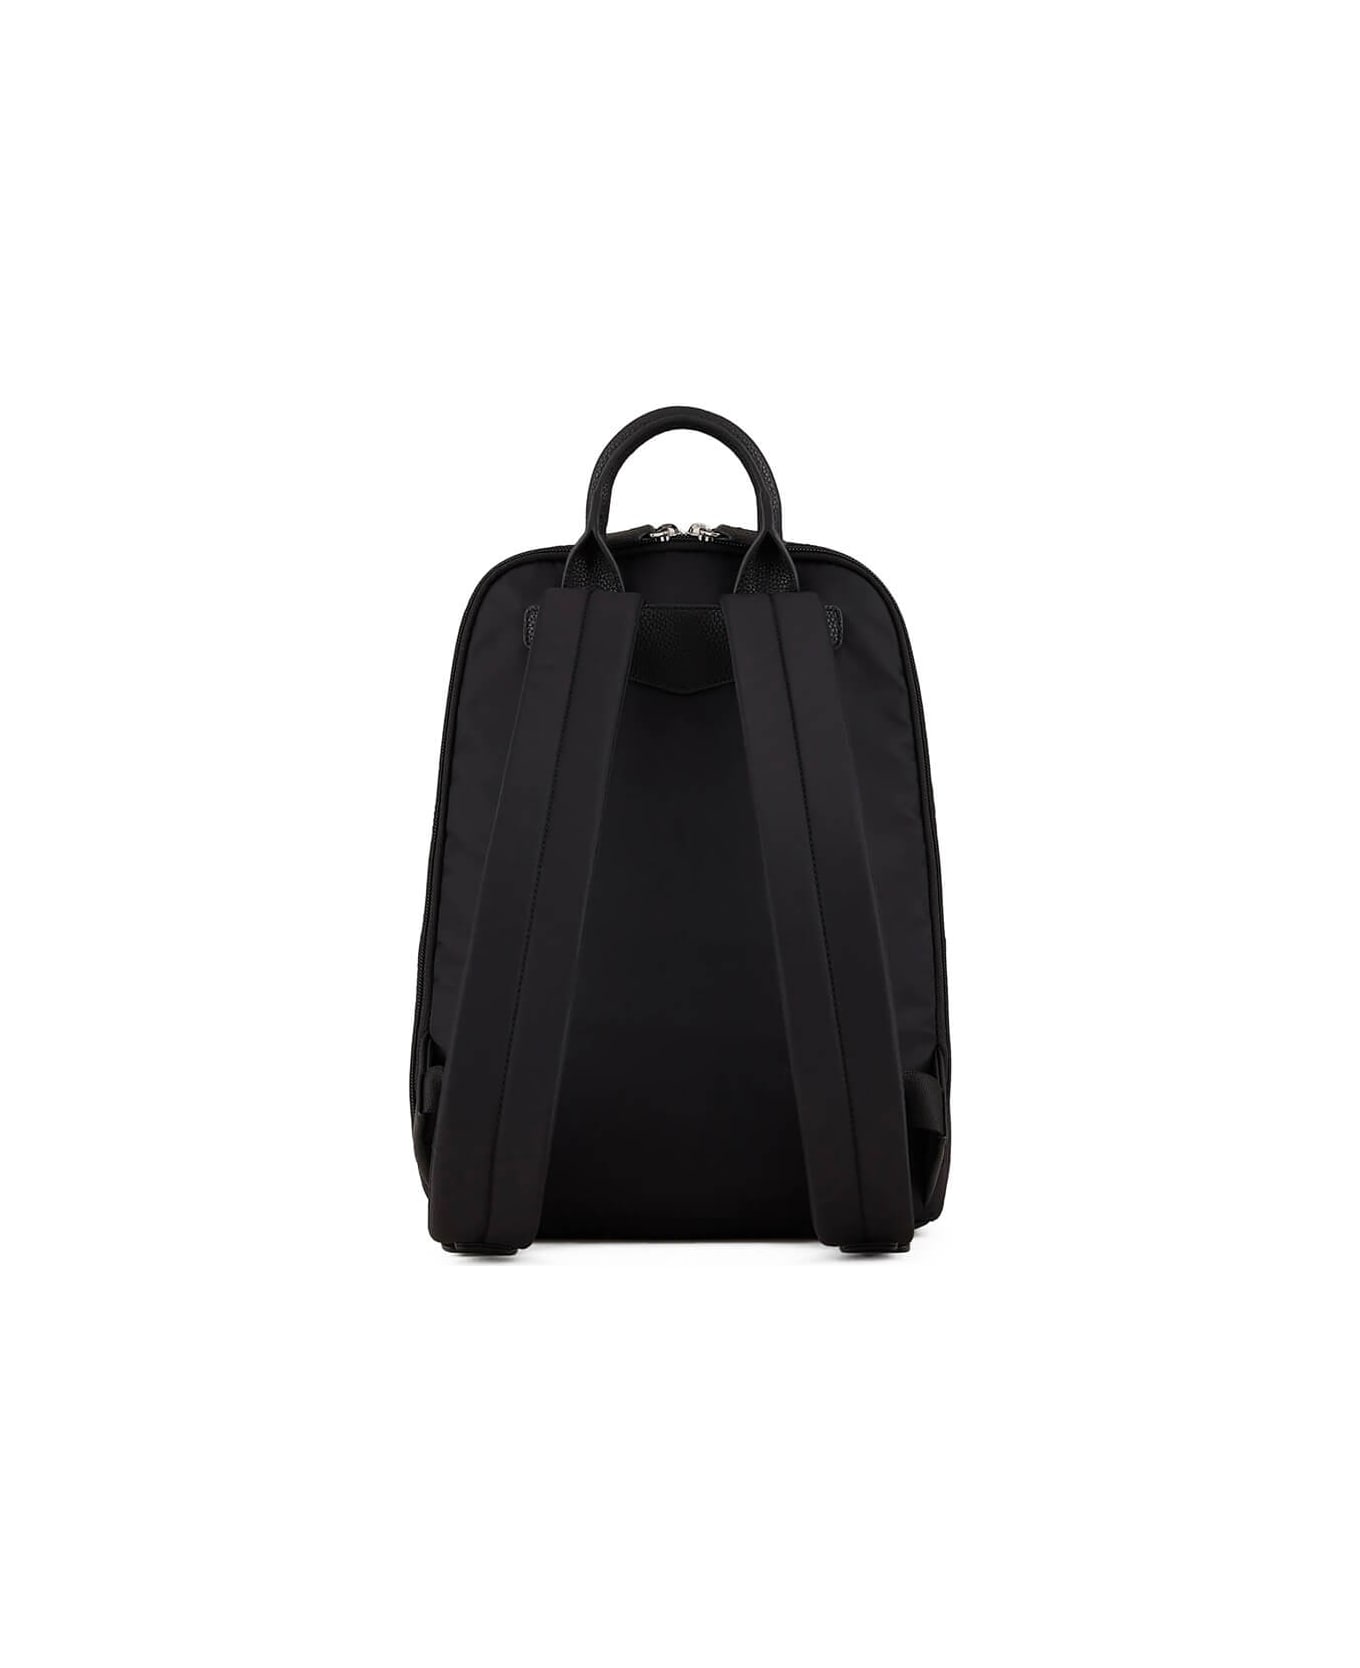 Emporio Armani Travel Essential Black Backpack - Nero